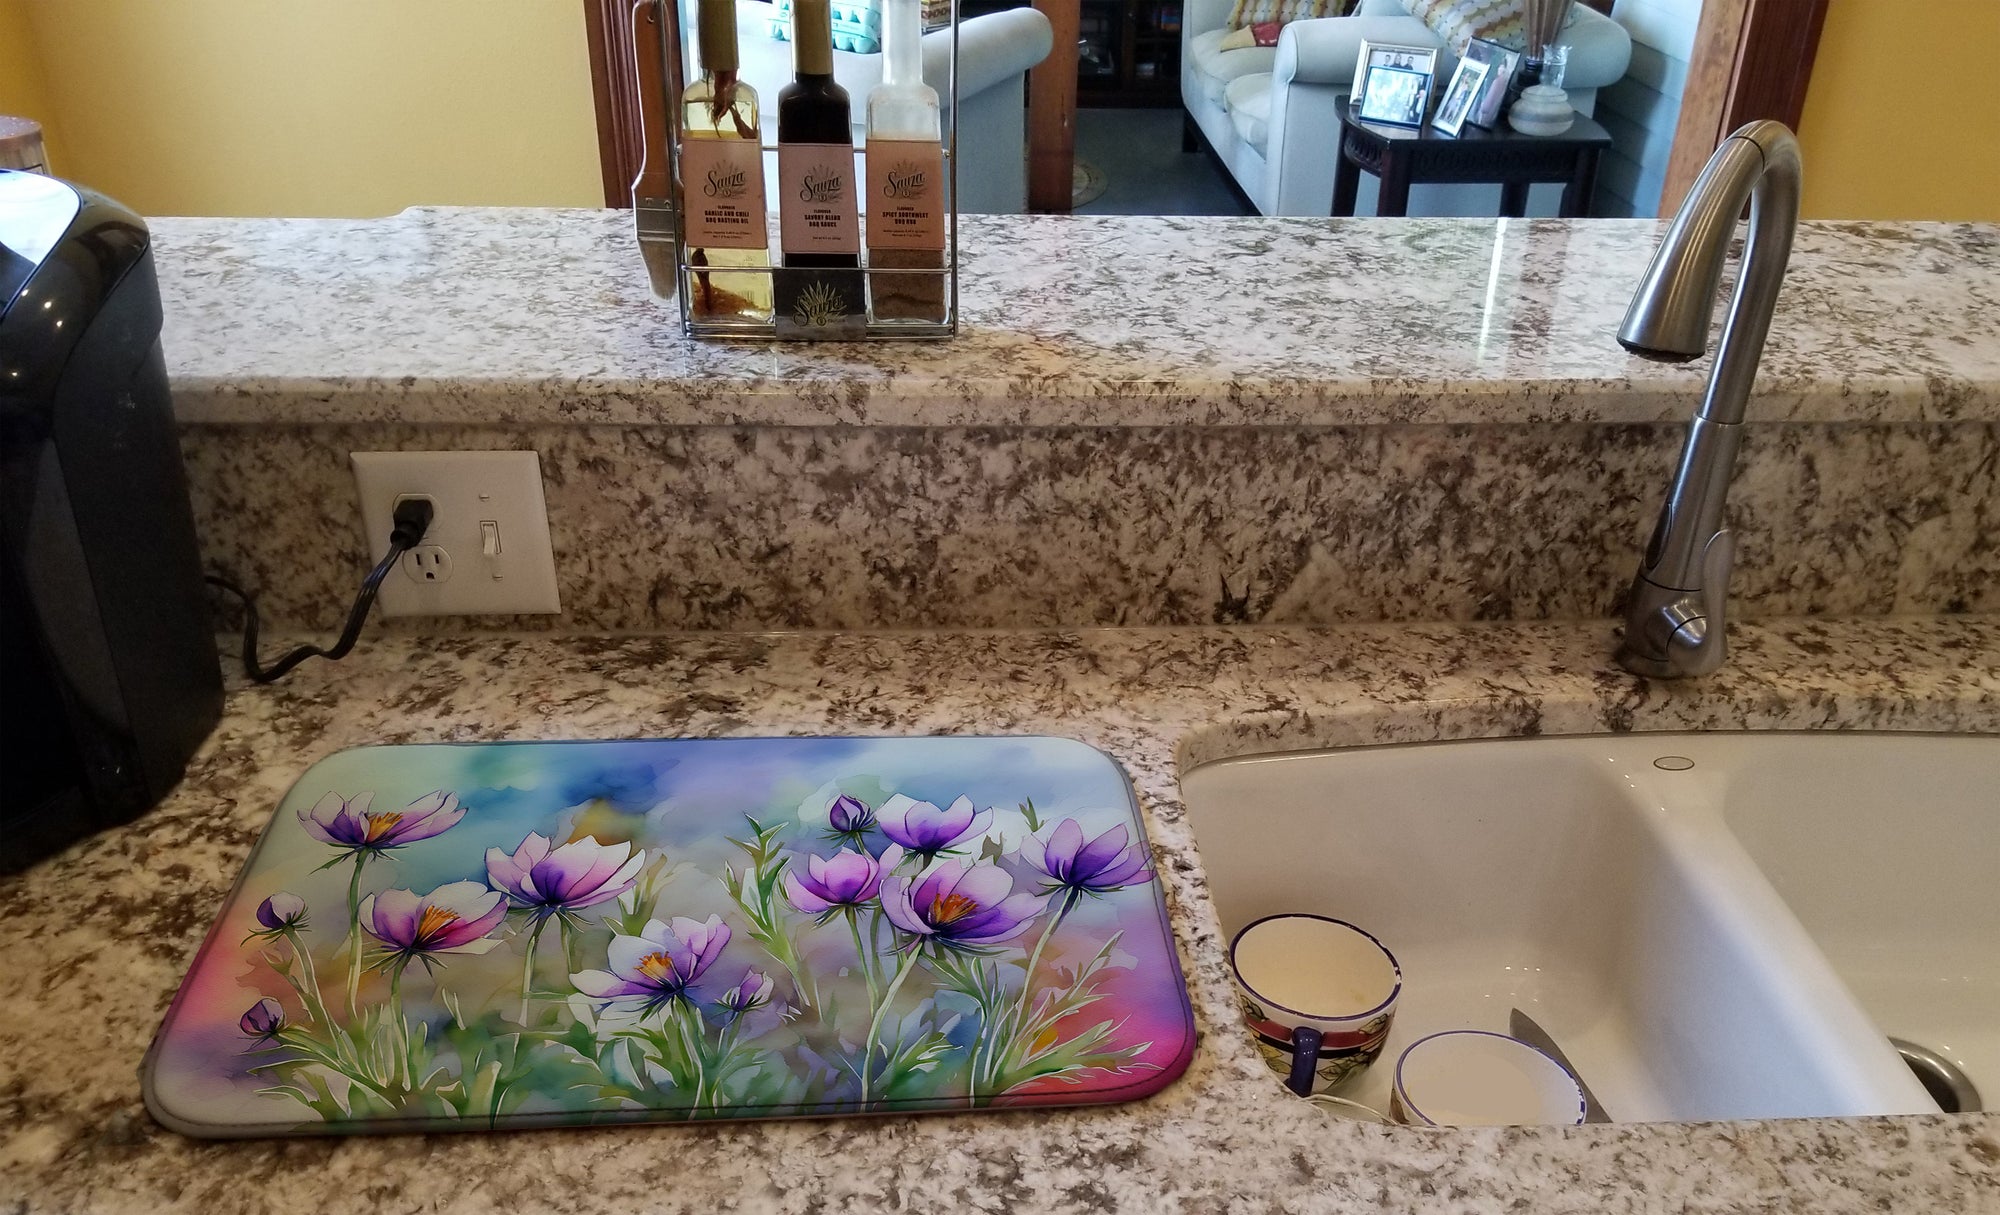 Buy this South Dakota Pasque Flowers in Watercolor Dish Drying Mat